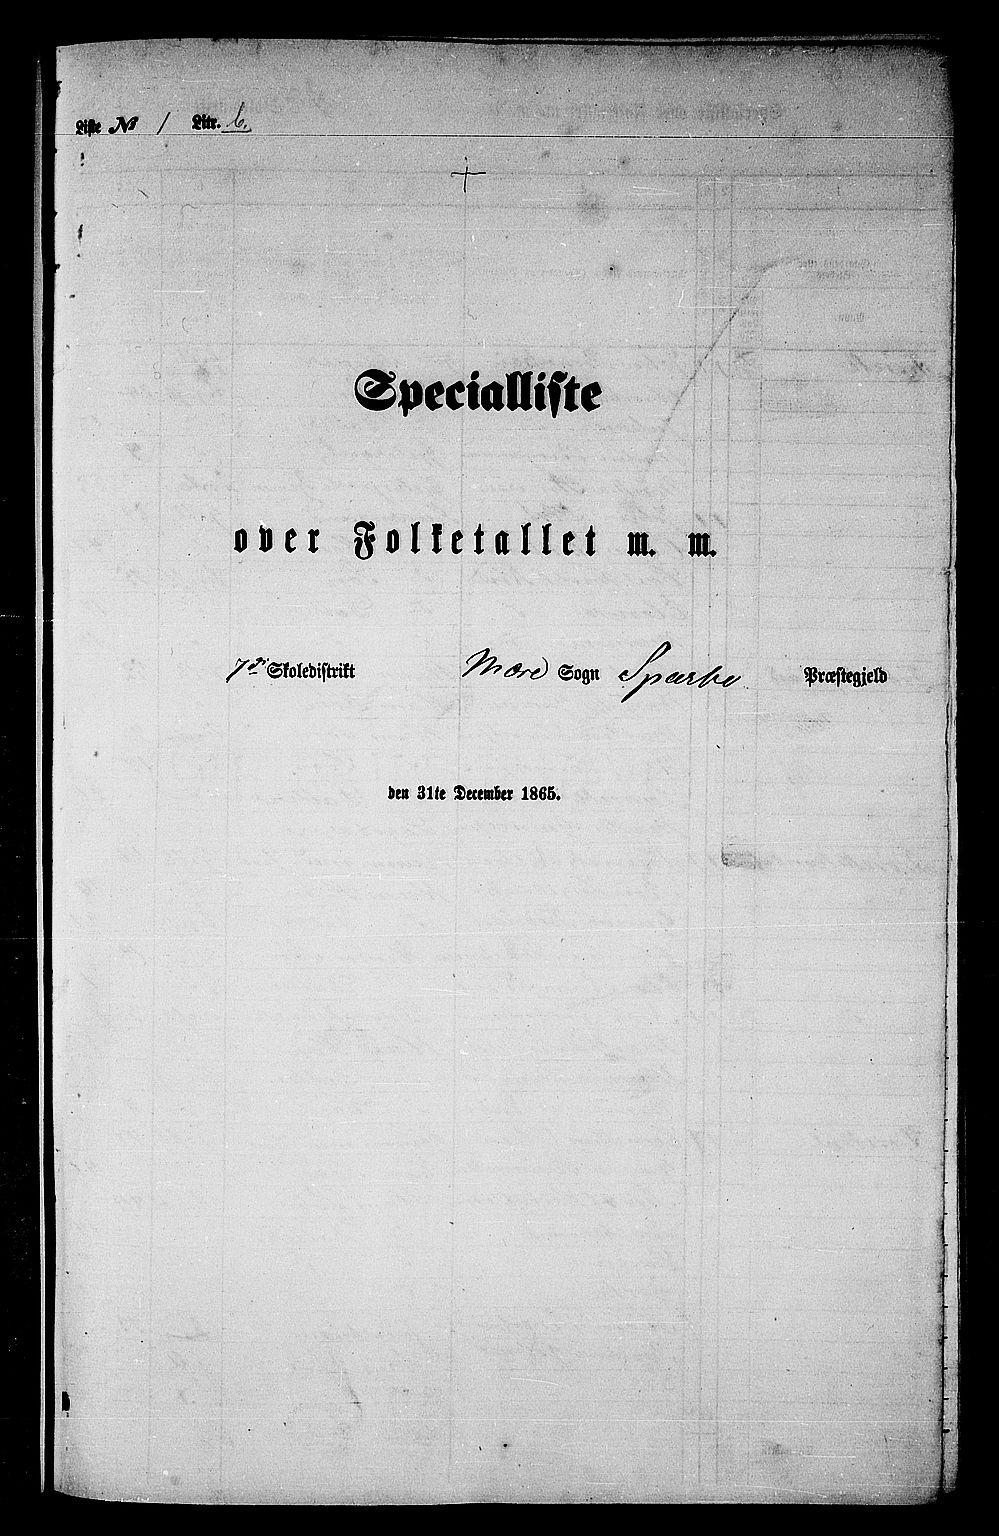 RA, Folketelling 1865 for 1731P Sparbu prestegjeld, 1865, s. 25